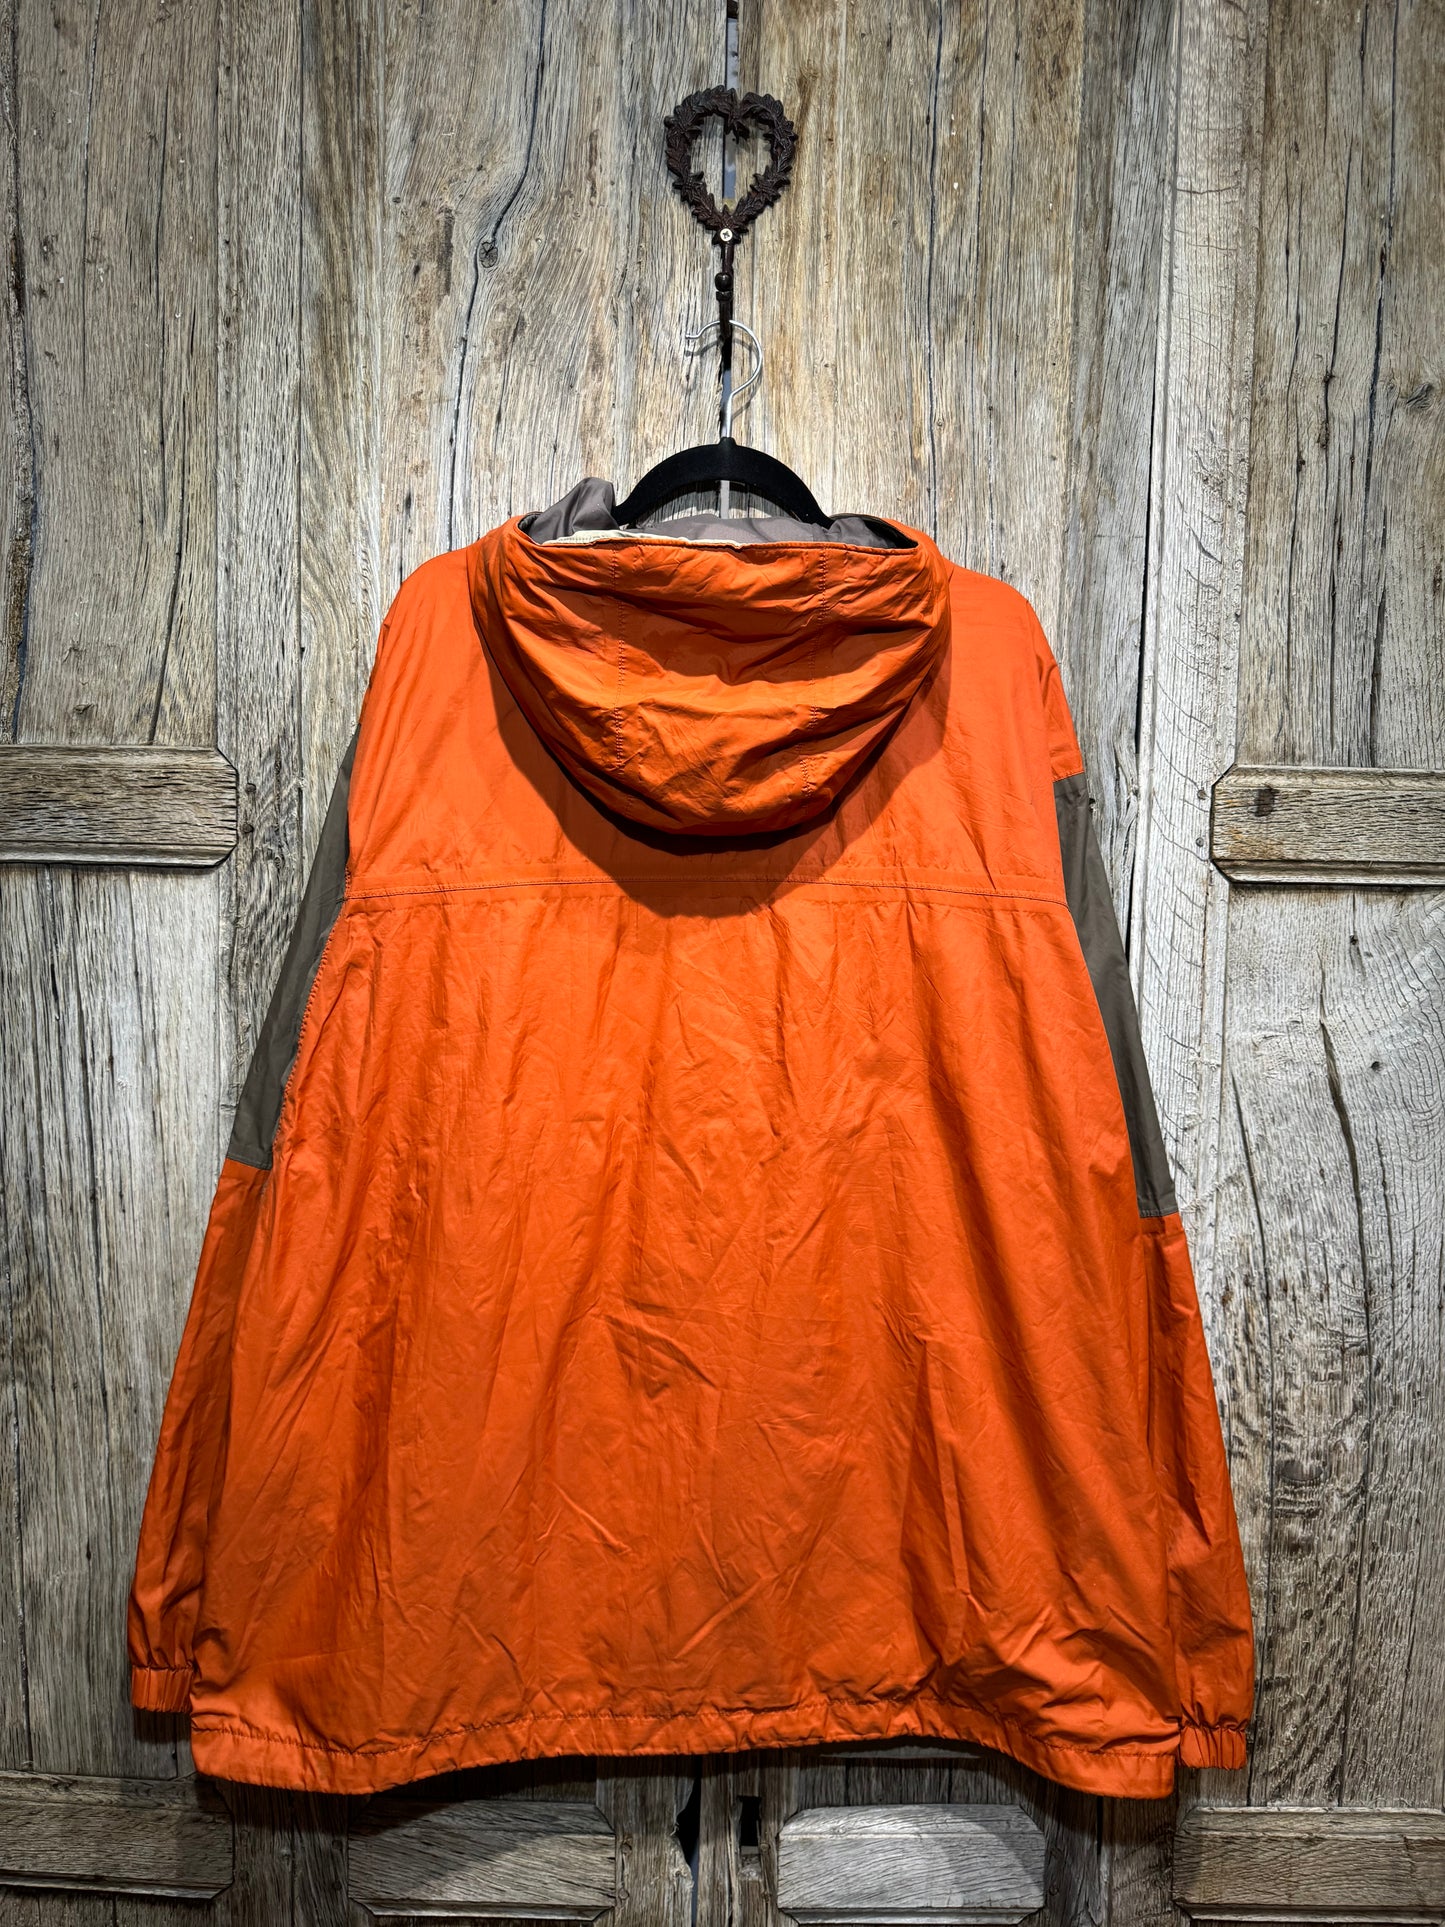 Vintage Columbia Orange Omni-tech Jacket